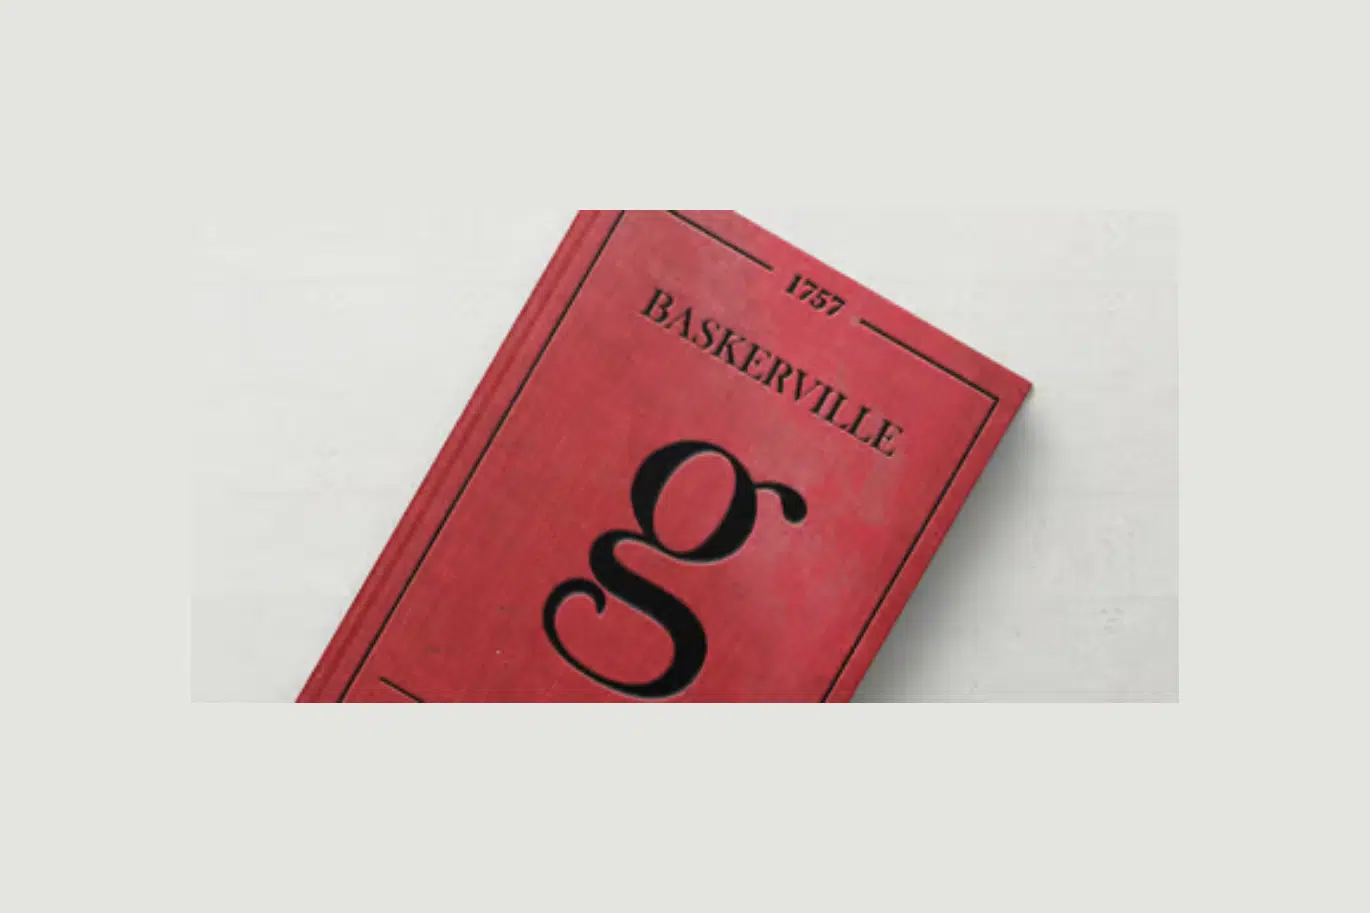 Baskerville Font Similar To Garamond